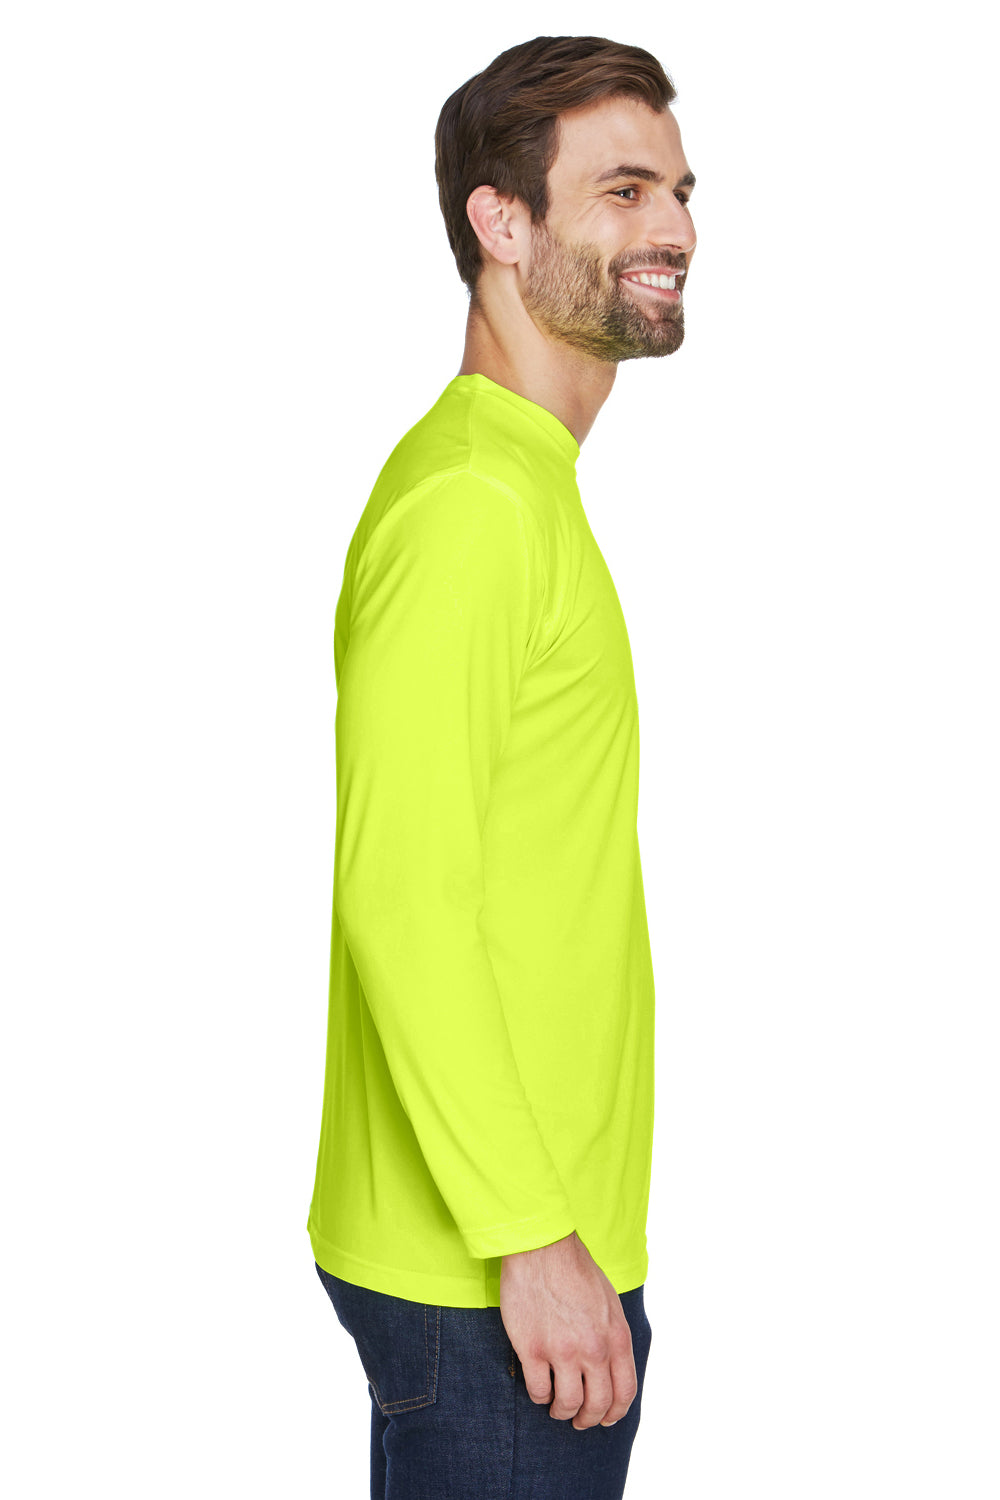 UltraClub 8422 Mens Cool & Dry Performance Moisture Wicking Long Sleeve Crewneck T-Shirt Bright Yellow Side